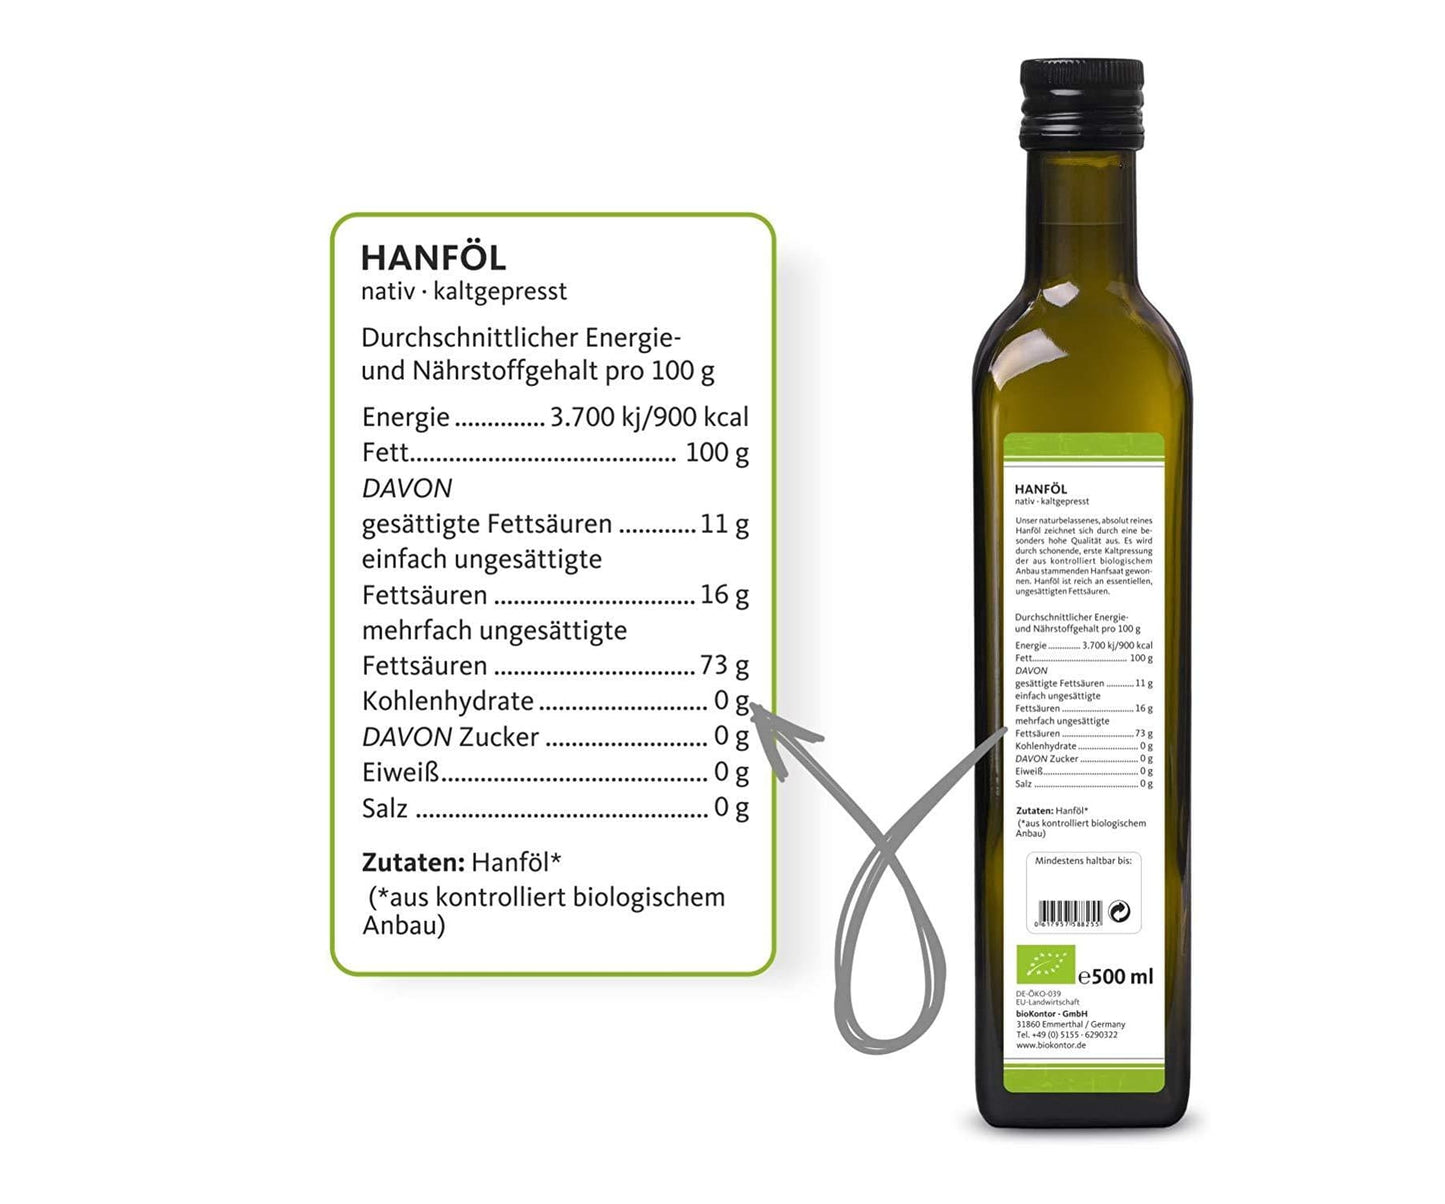 bioKontor - bioKontor BIO Hanföl - nativ kaltgepresst reich an Omega-3-Fettsäuren - 500ml